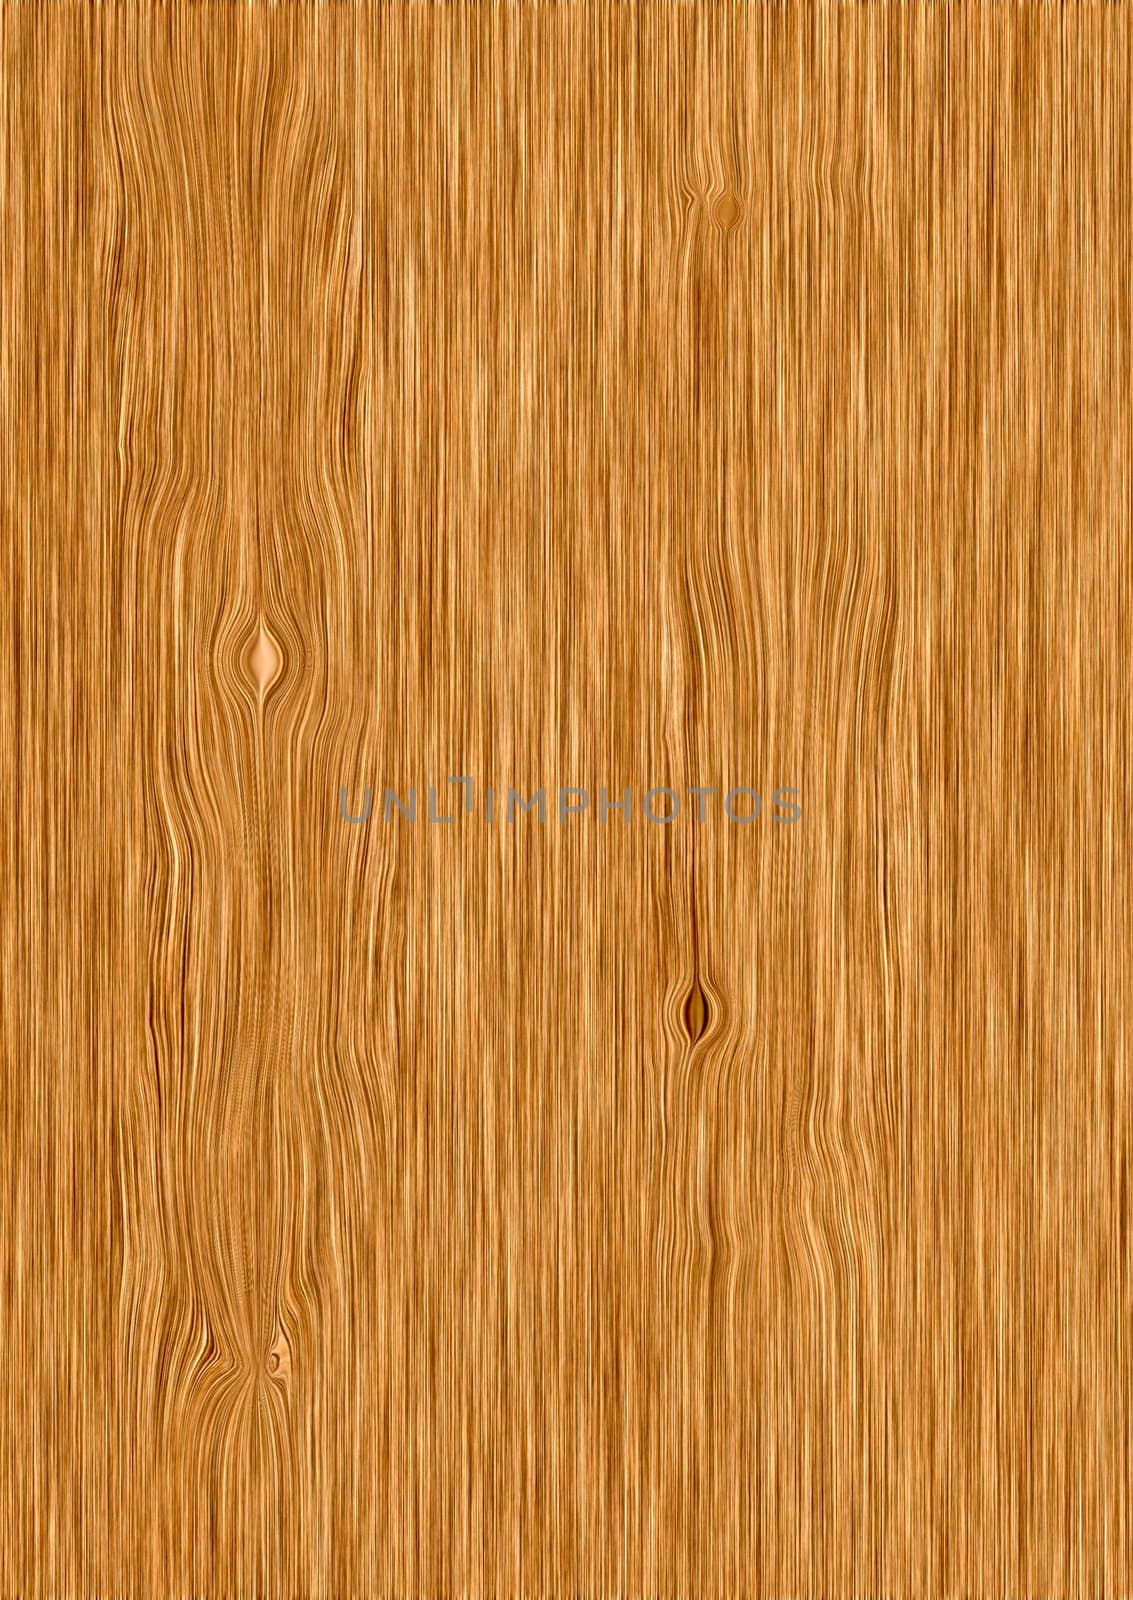 Polished Wood Texture